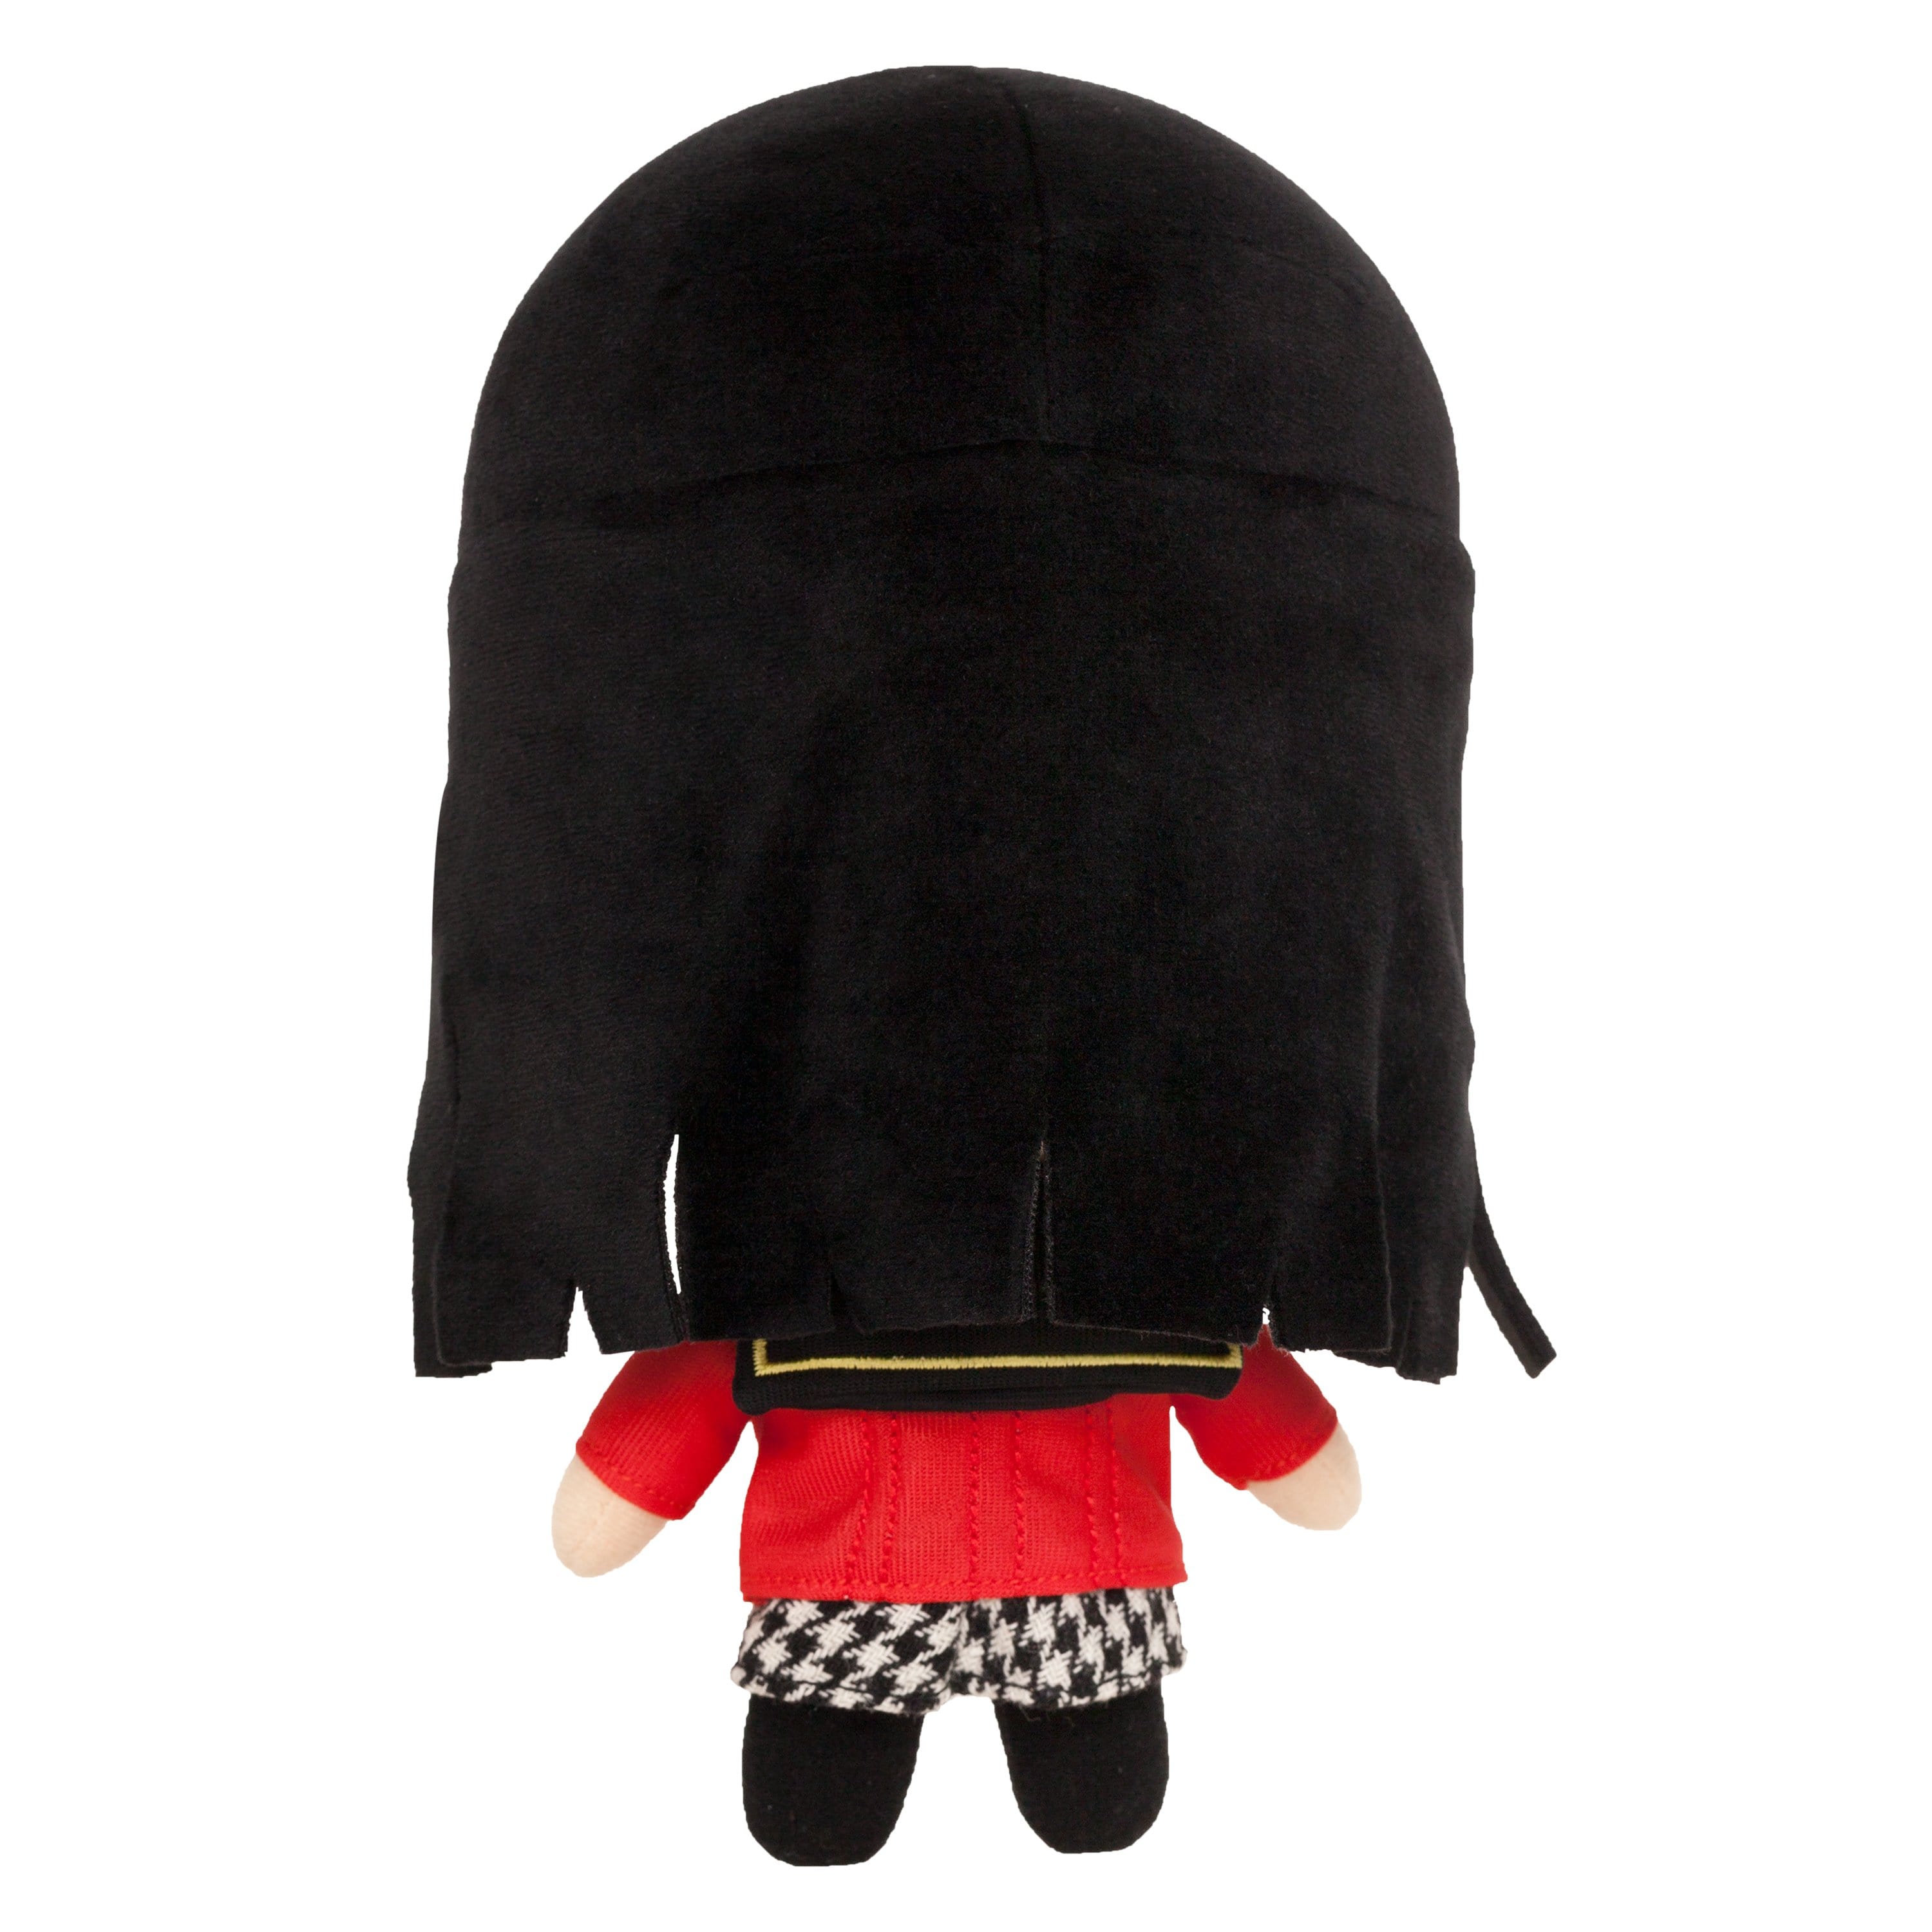 Persona 4 - 10" Yukiko Amagi Collector's Stuffed Plush Back View